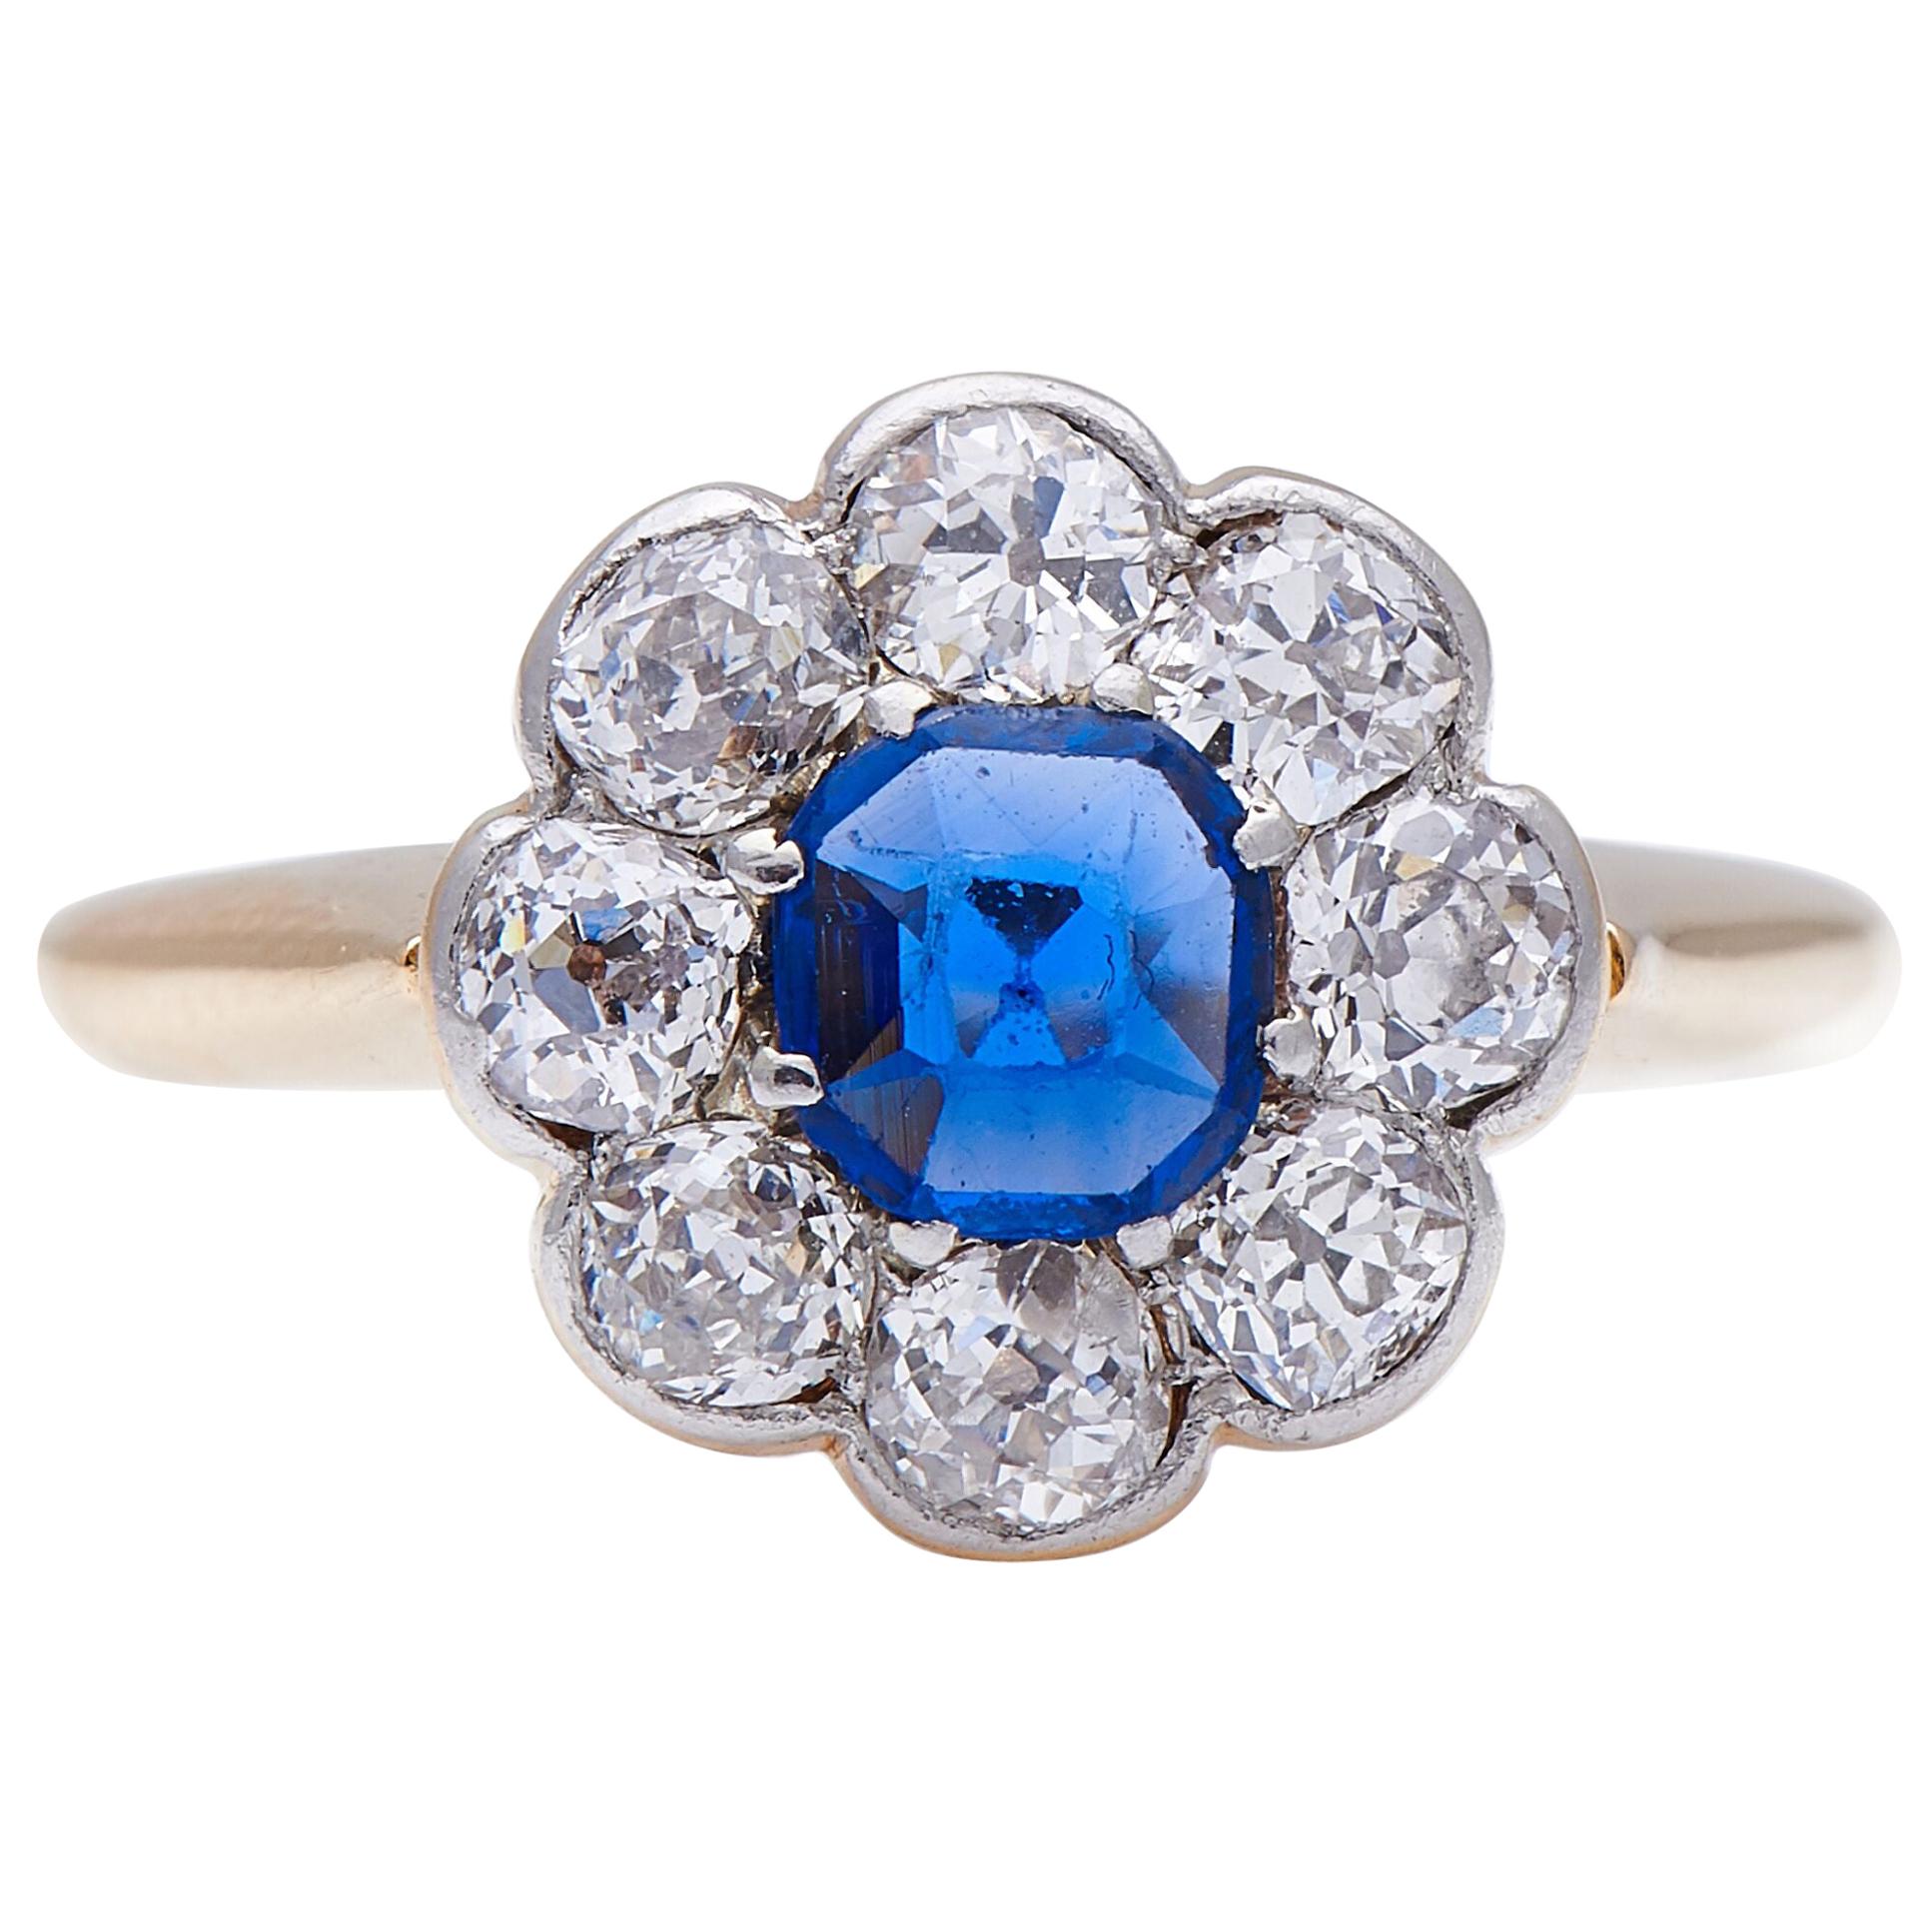 Antique Art Deco, 18 Carat Gold, Royal Blue Sapphire and Diamond Engagement Ring